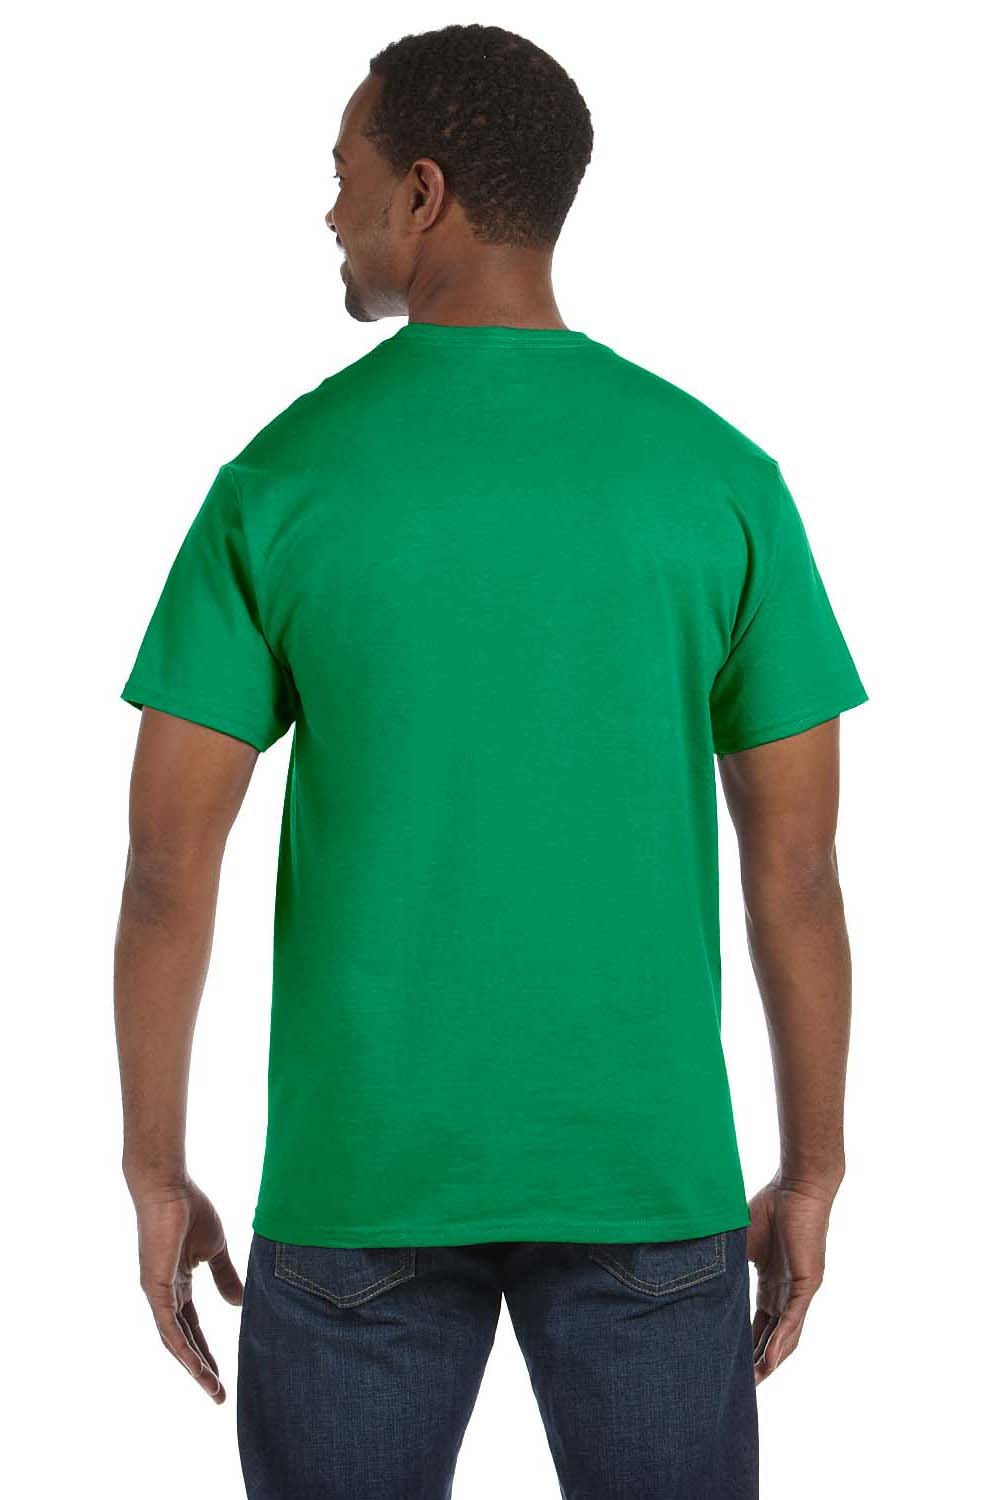 Hanes 5250T Mens ComfortSoft Short Sleeve Crewneck T-Shirt Kelly Green Back